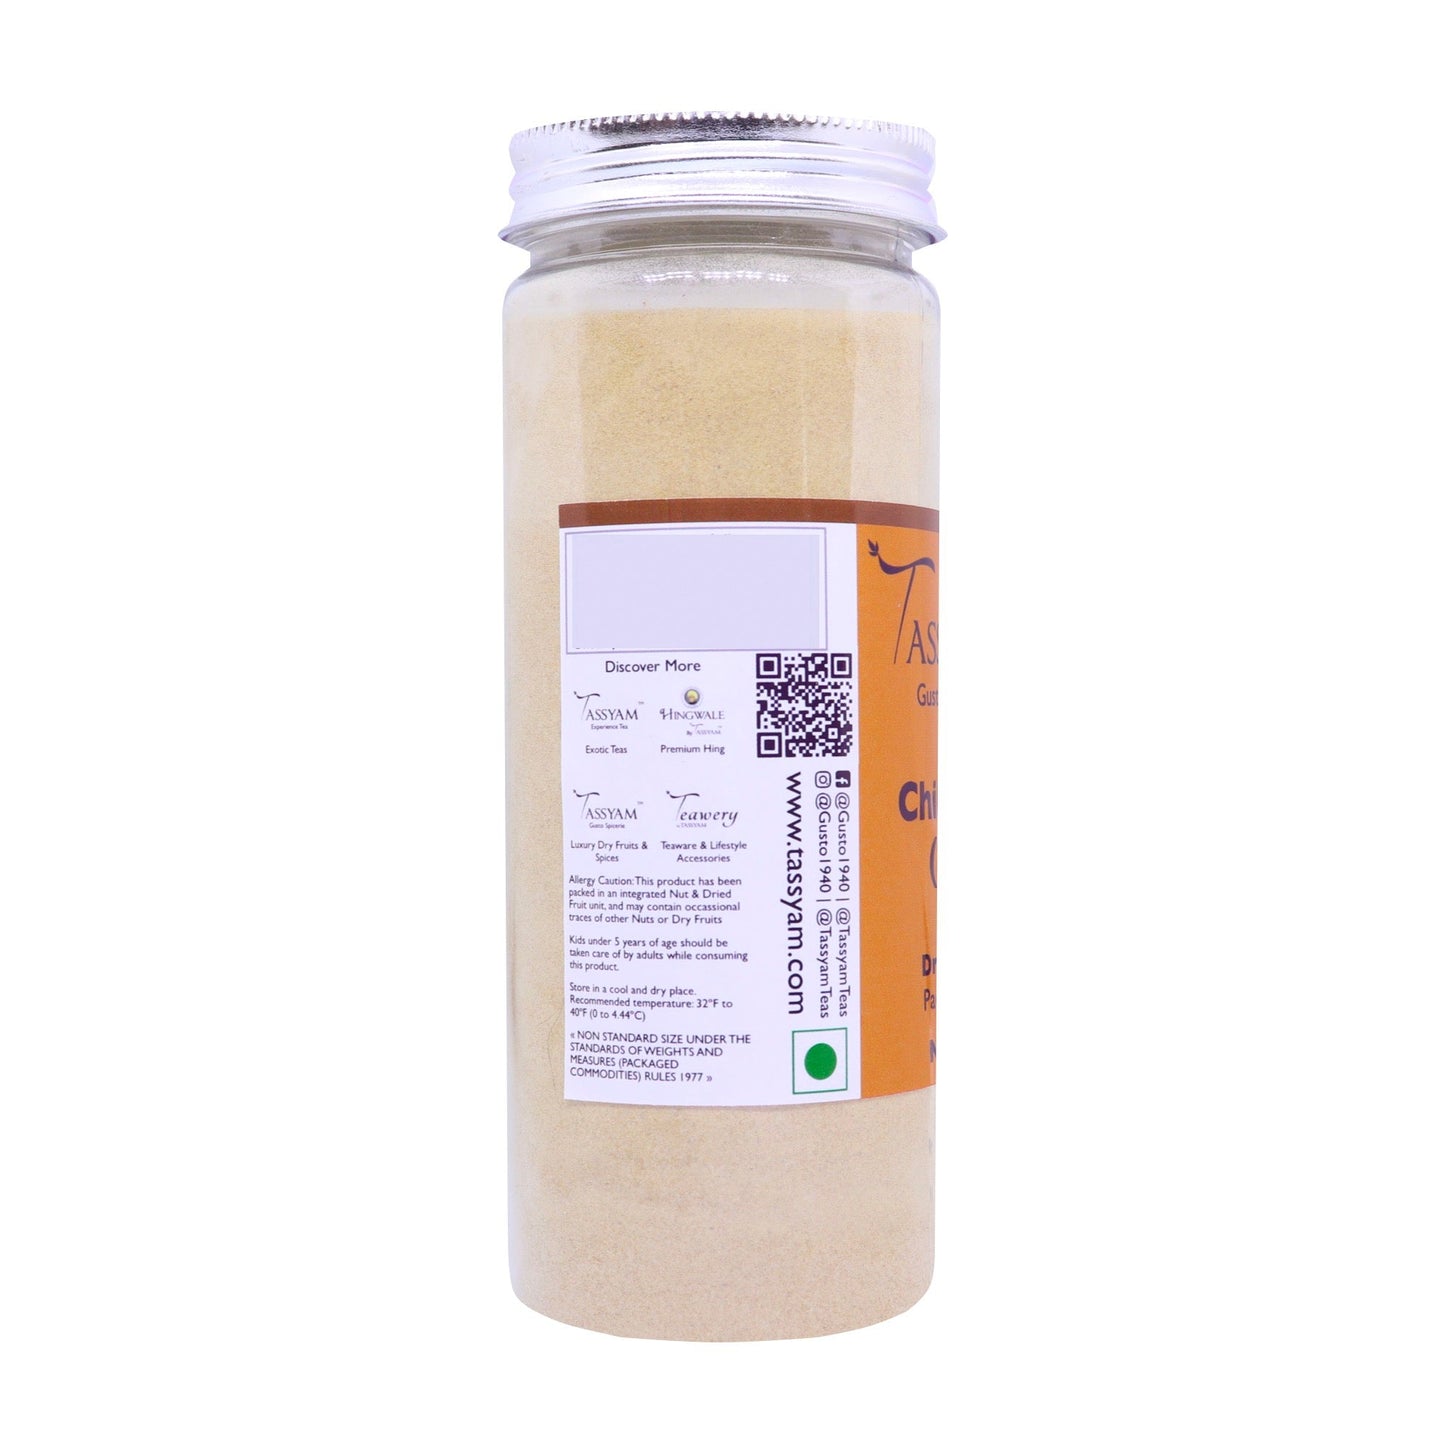 Chikoo Powder 200g - Tassyam Organics